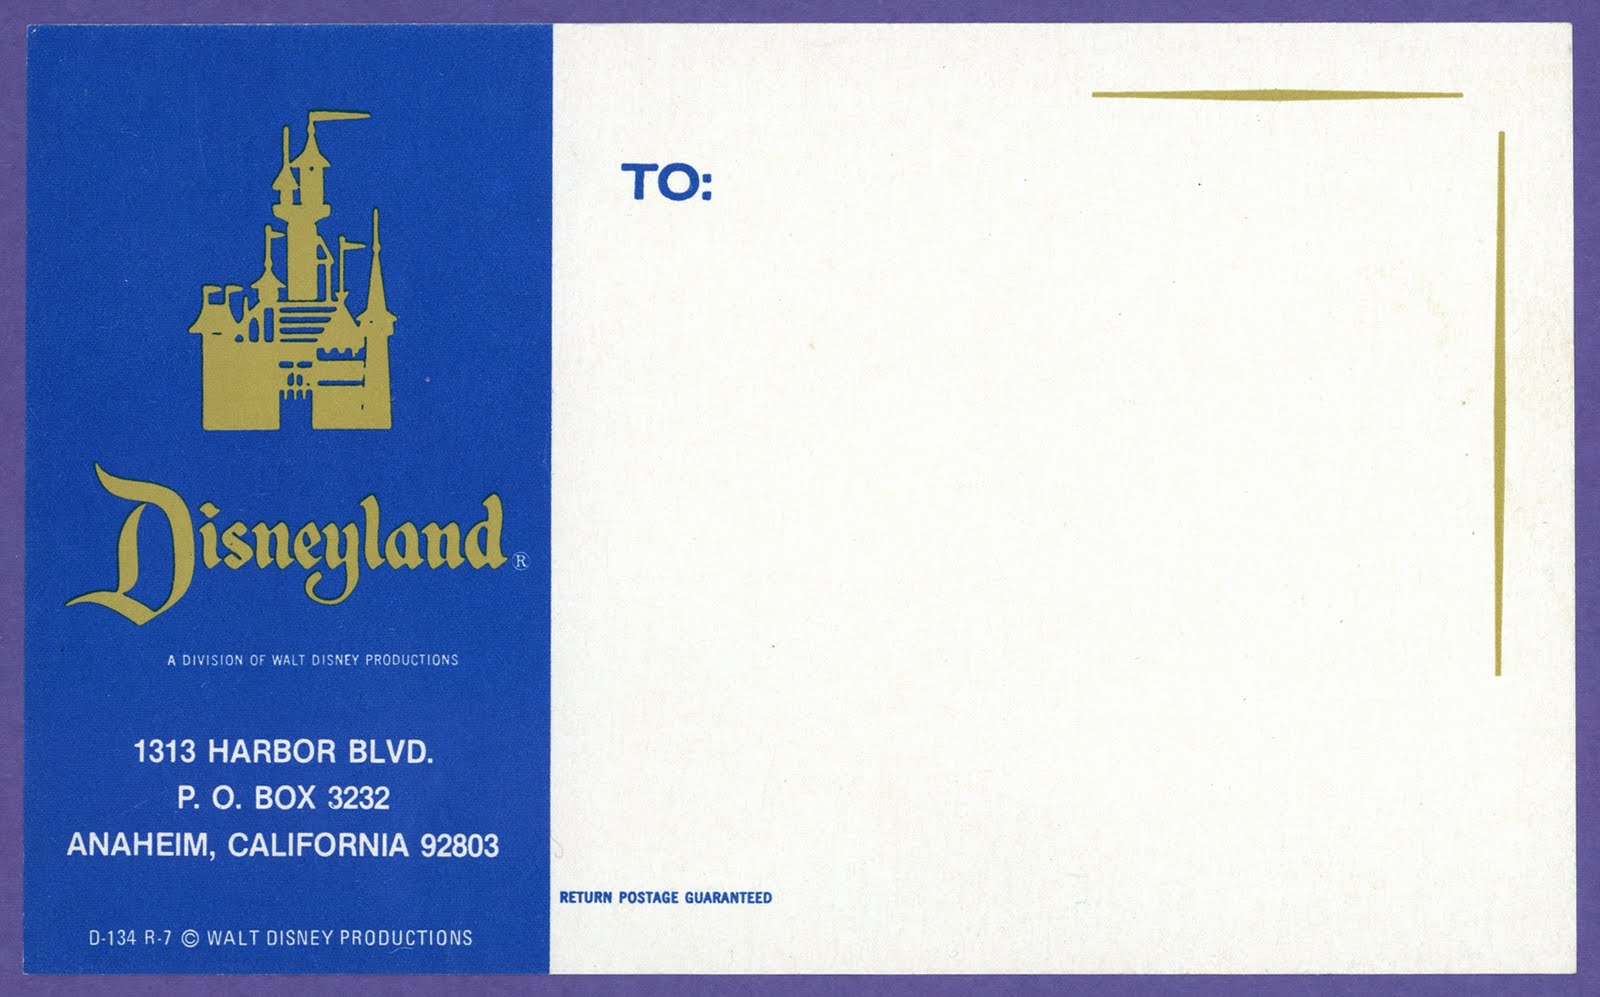 Vintage Disneyland Tickets: Ship me to Disneyland!